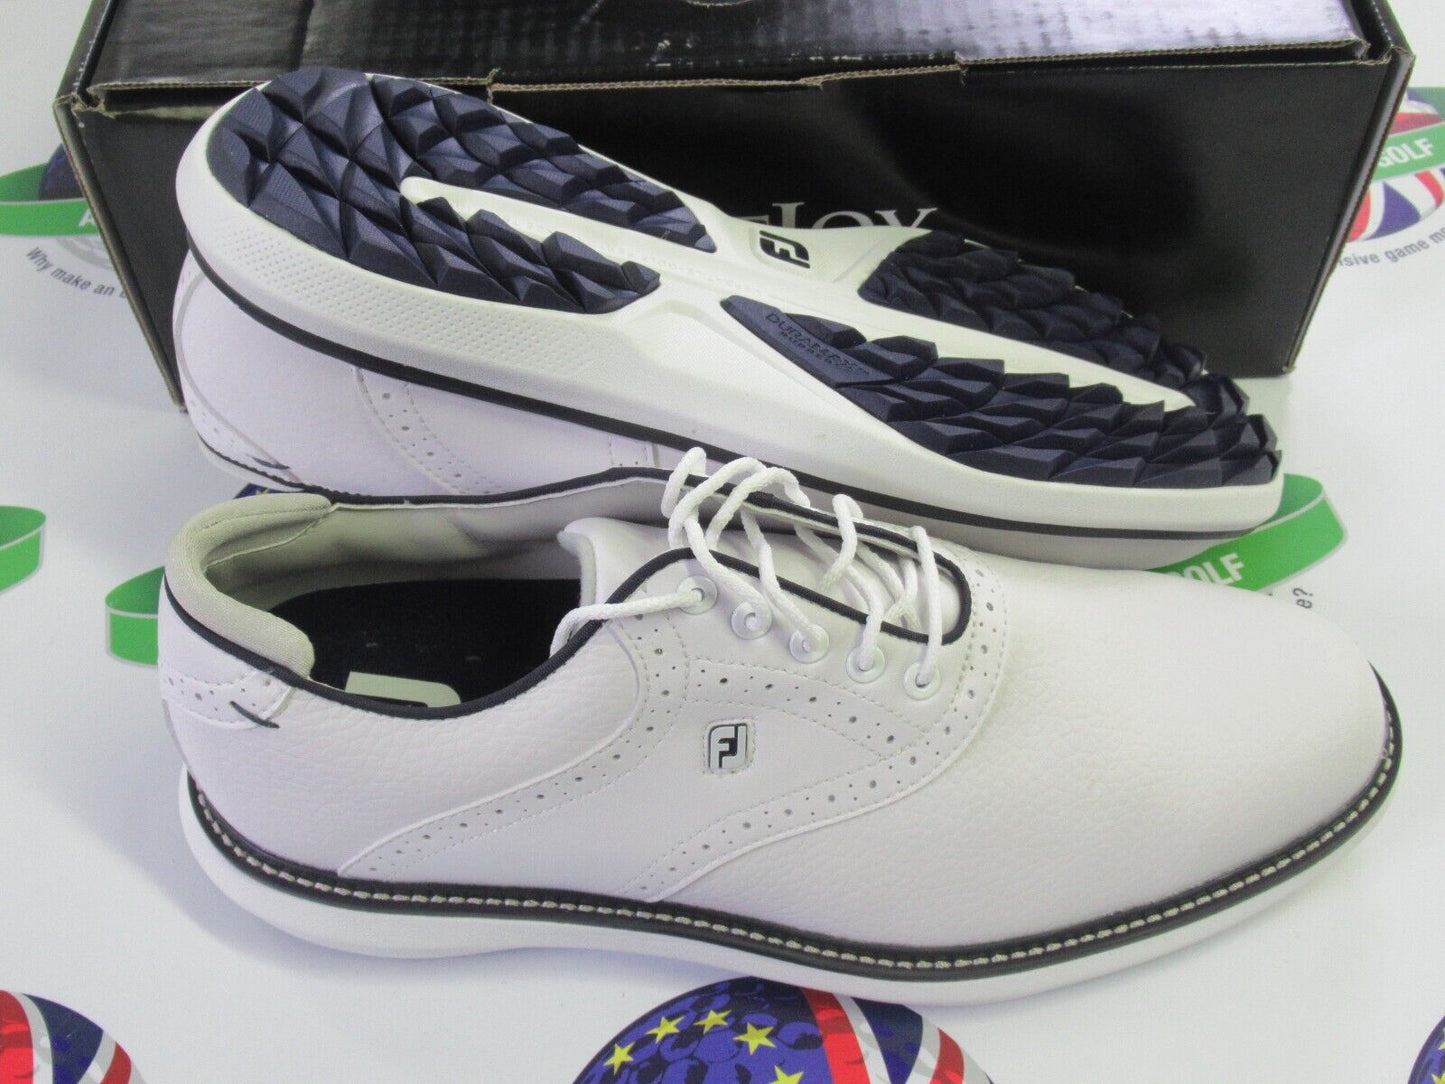 footjoy traditions waterproof golf shoes 57927k white uk size 9.5 medium